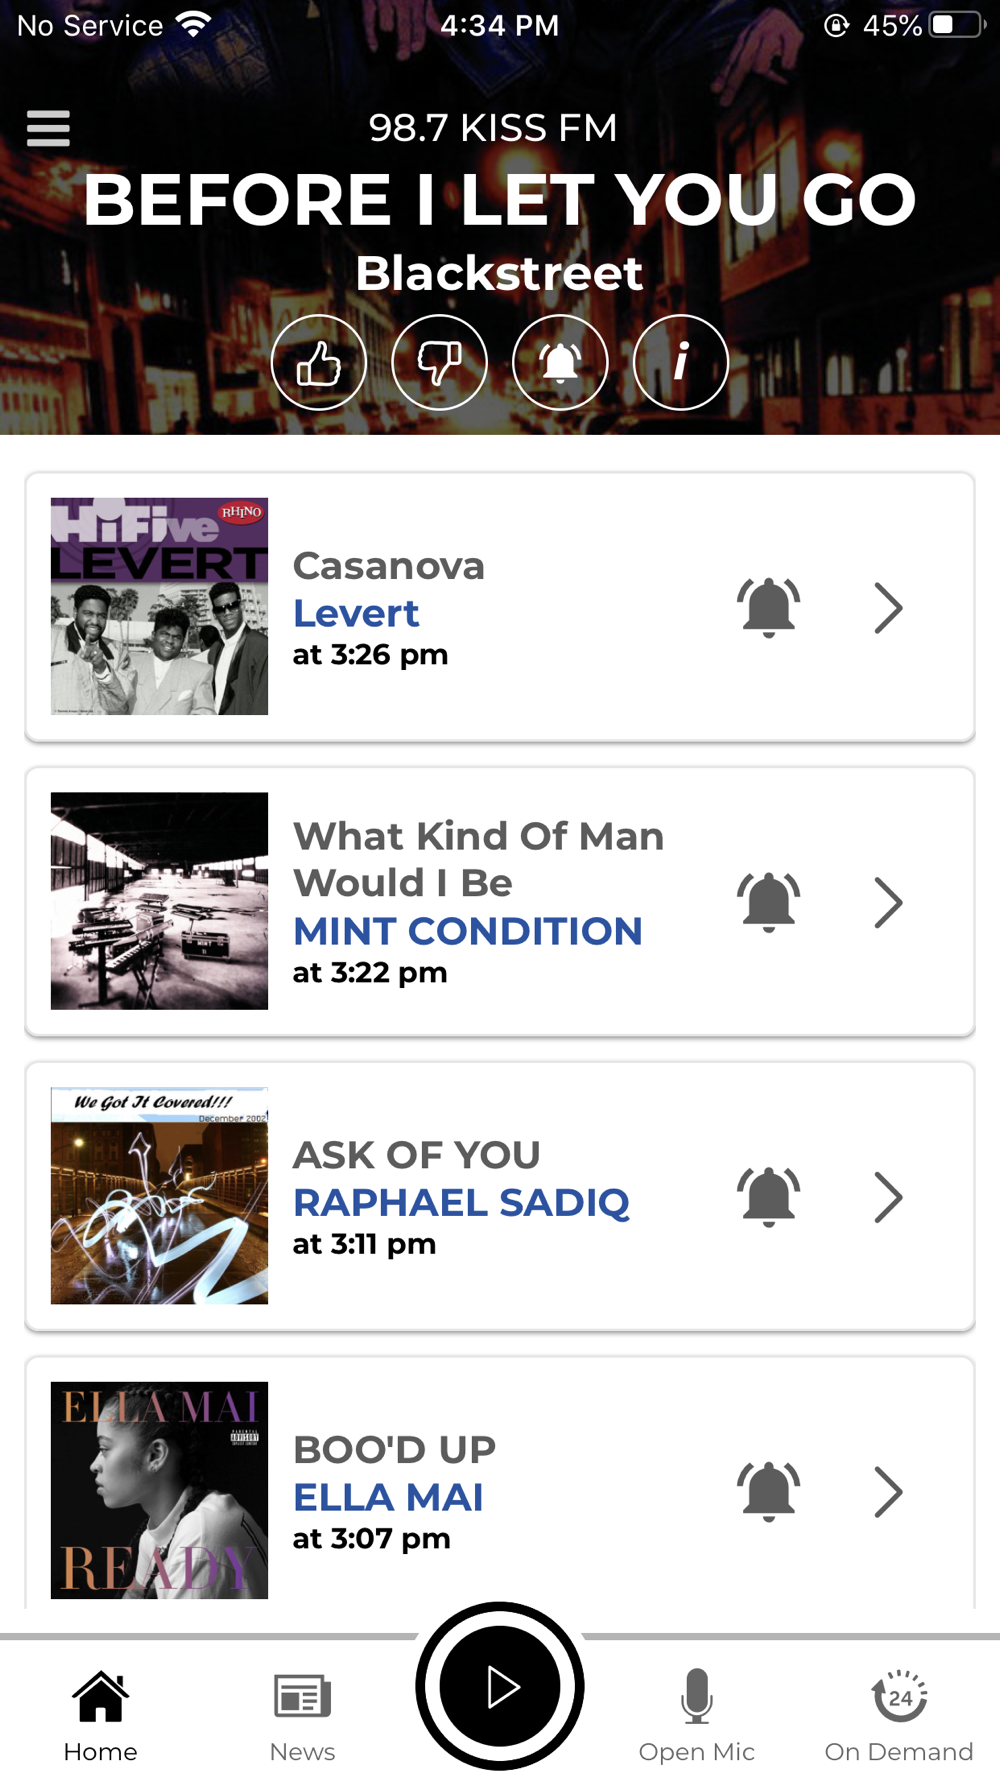 98.7 Kiss FM Birmingham Free Download App for iPhone - STEPrimo.com